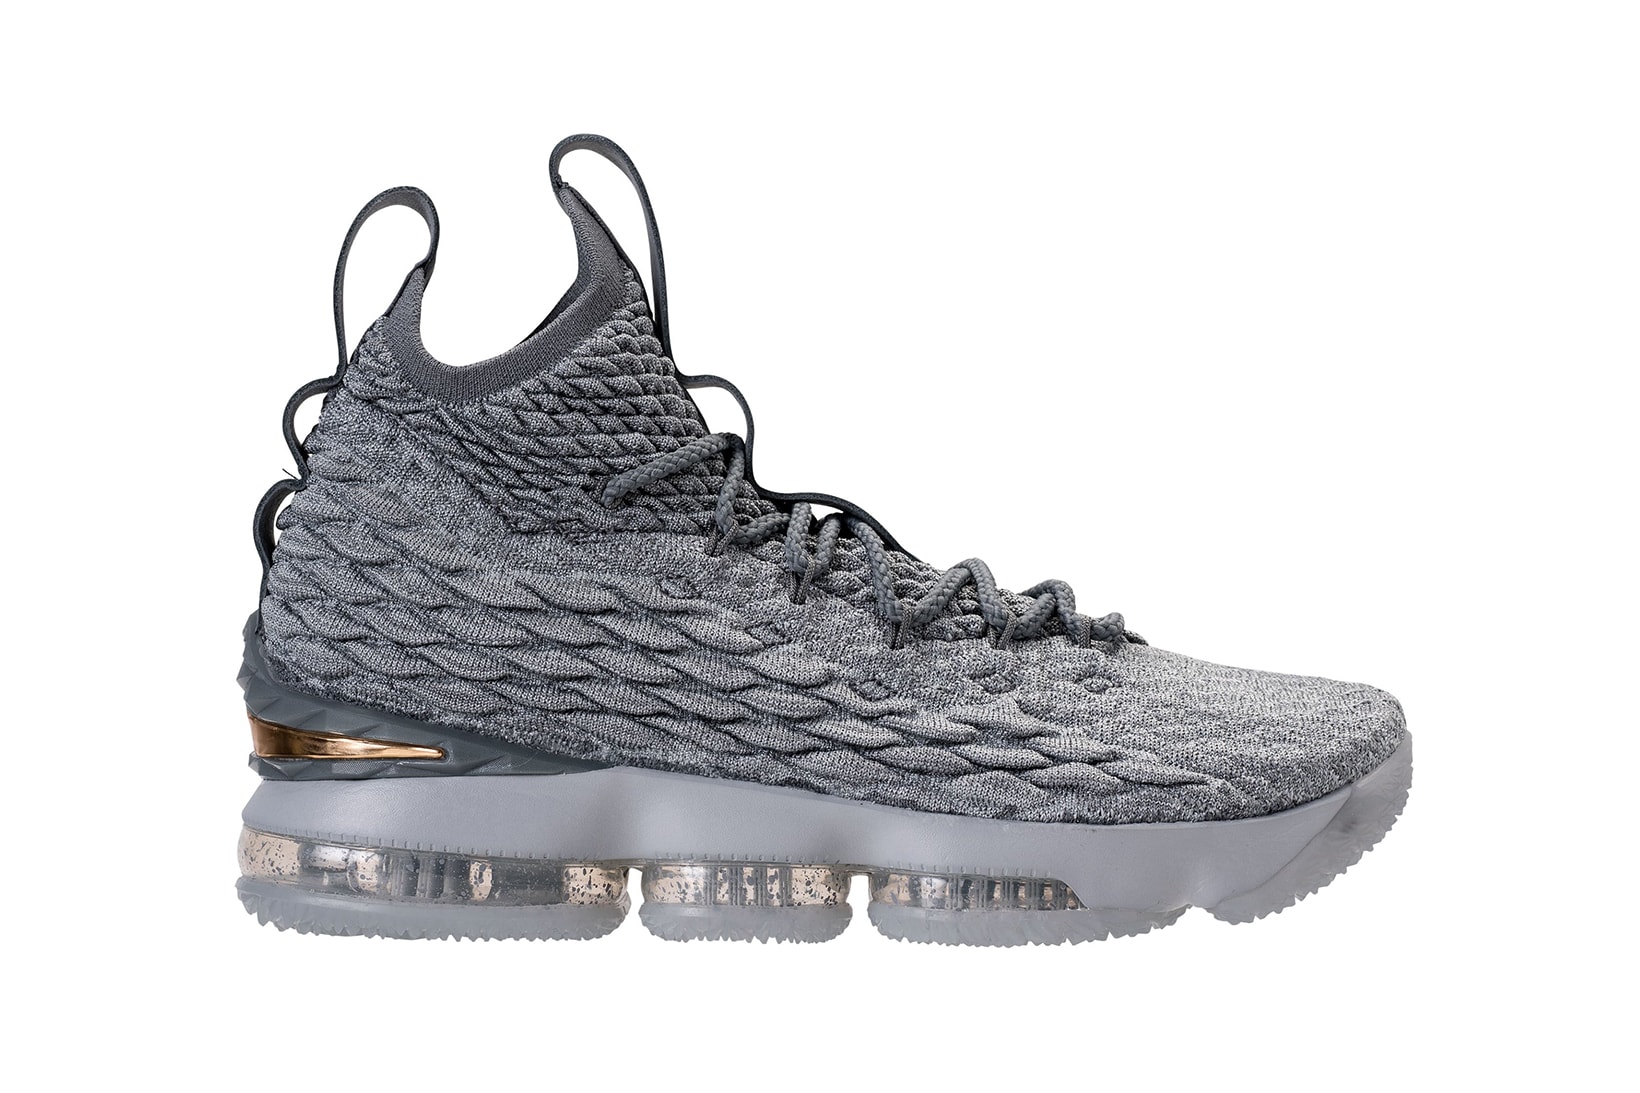 Nike LeBron 15 Cool Grey Metallic Gold 2017 December 26 Release Date Info Sneakers Shoes Footwear